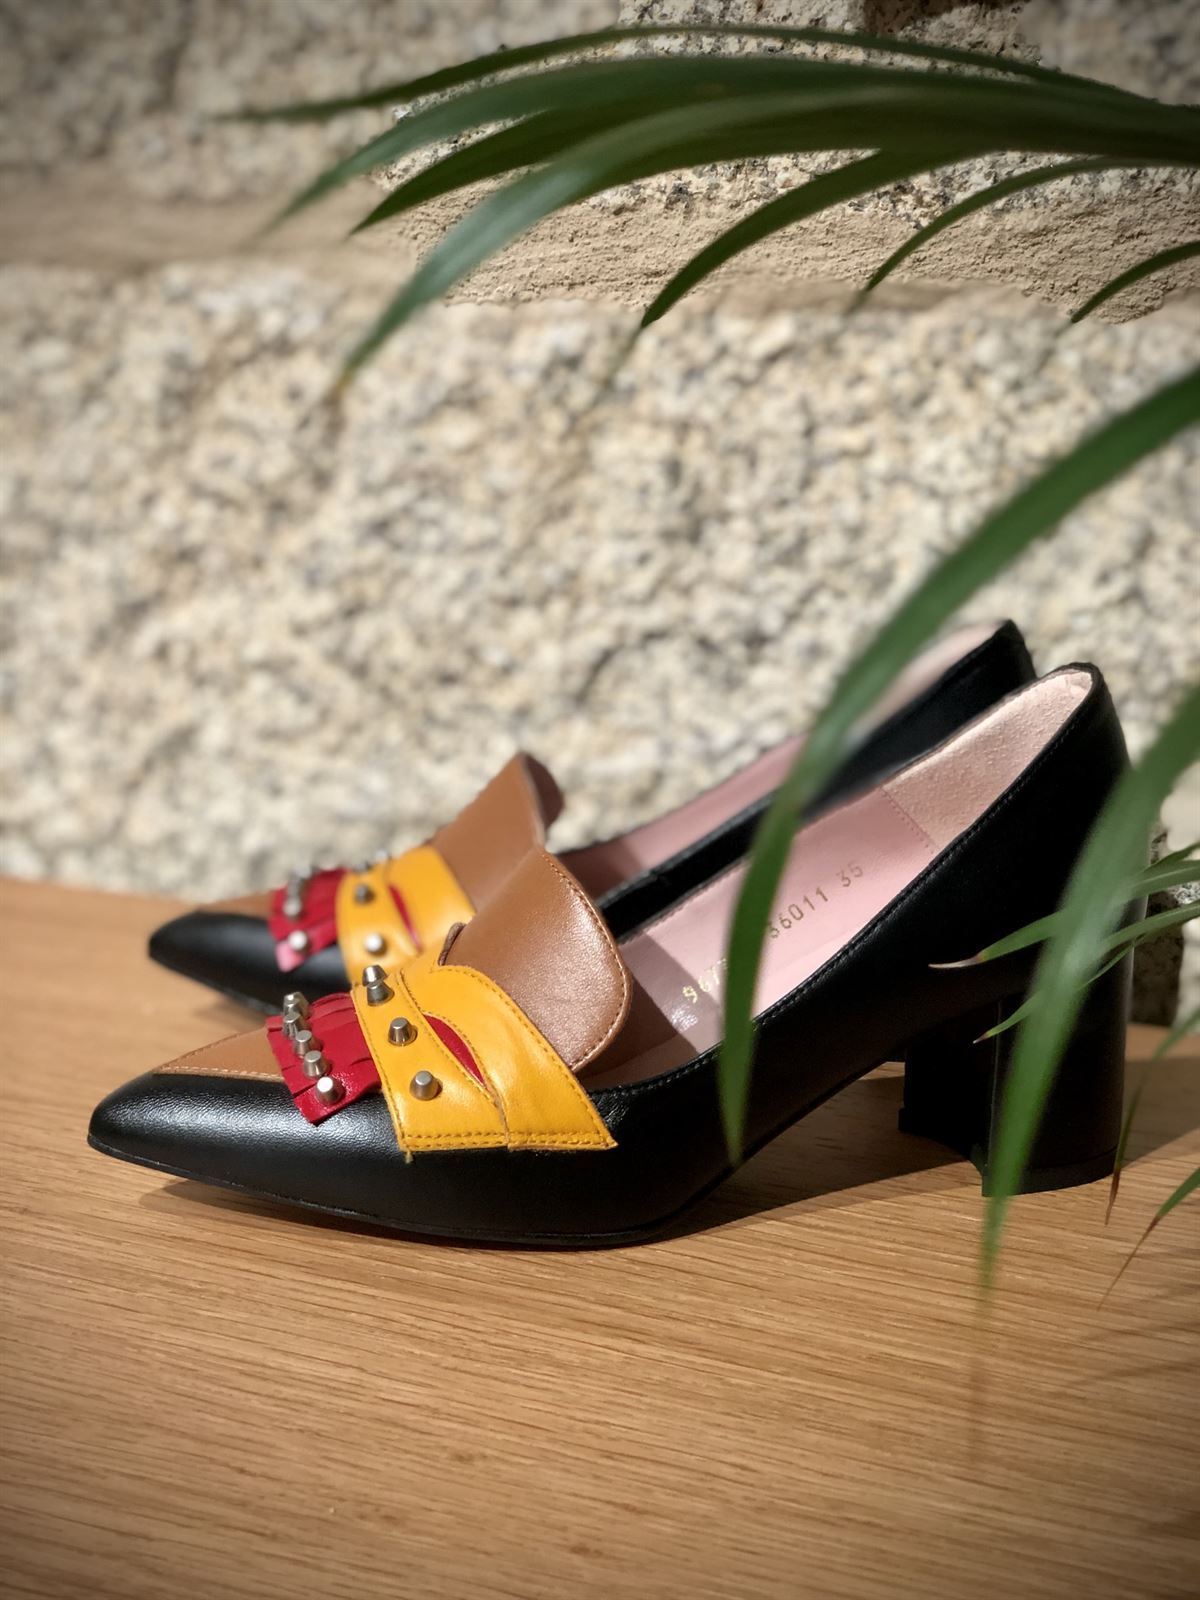 Zapato Angari negros flecos rojo - Imagen 2